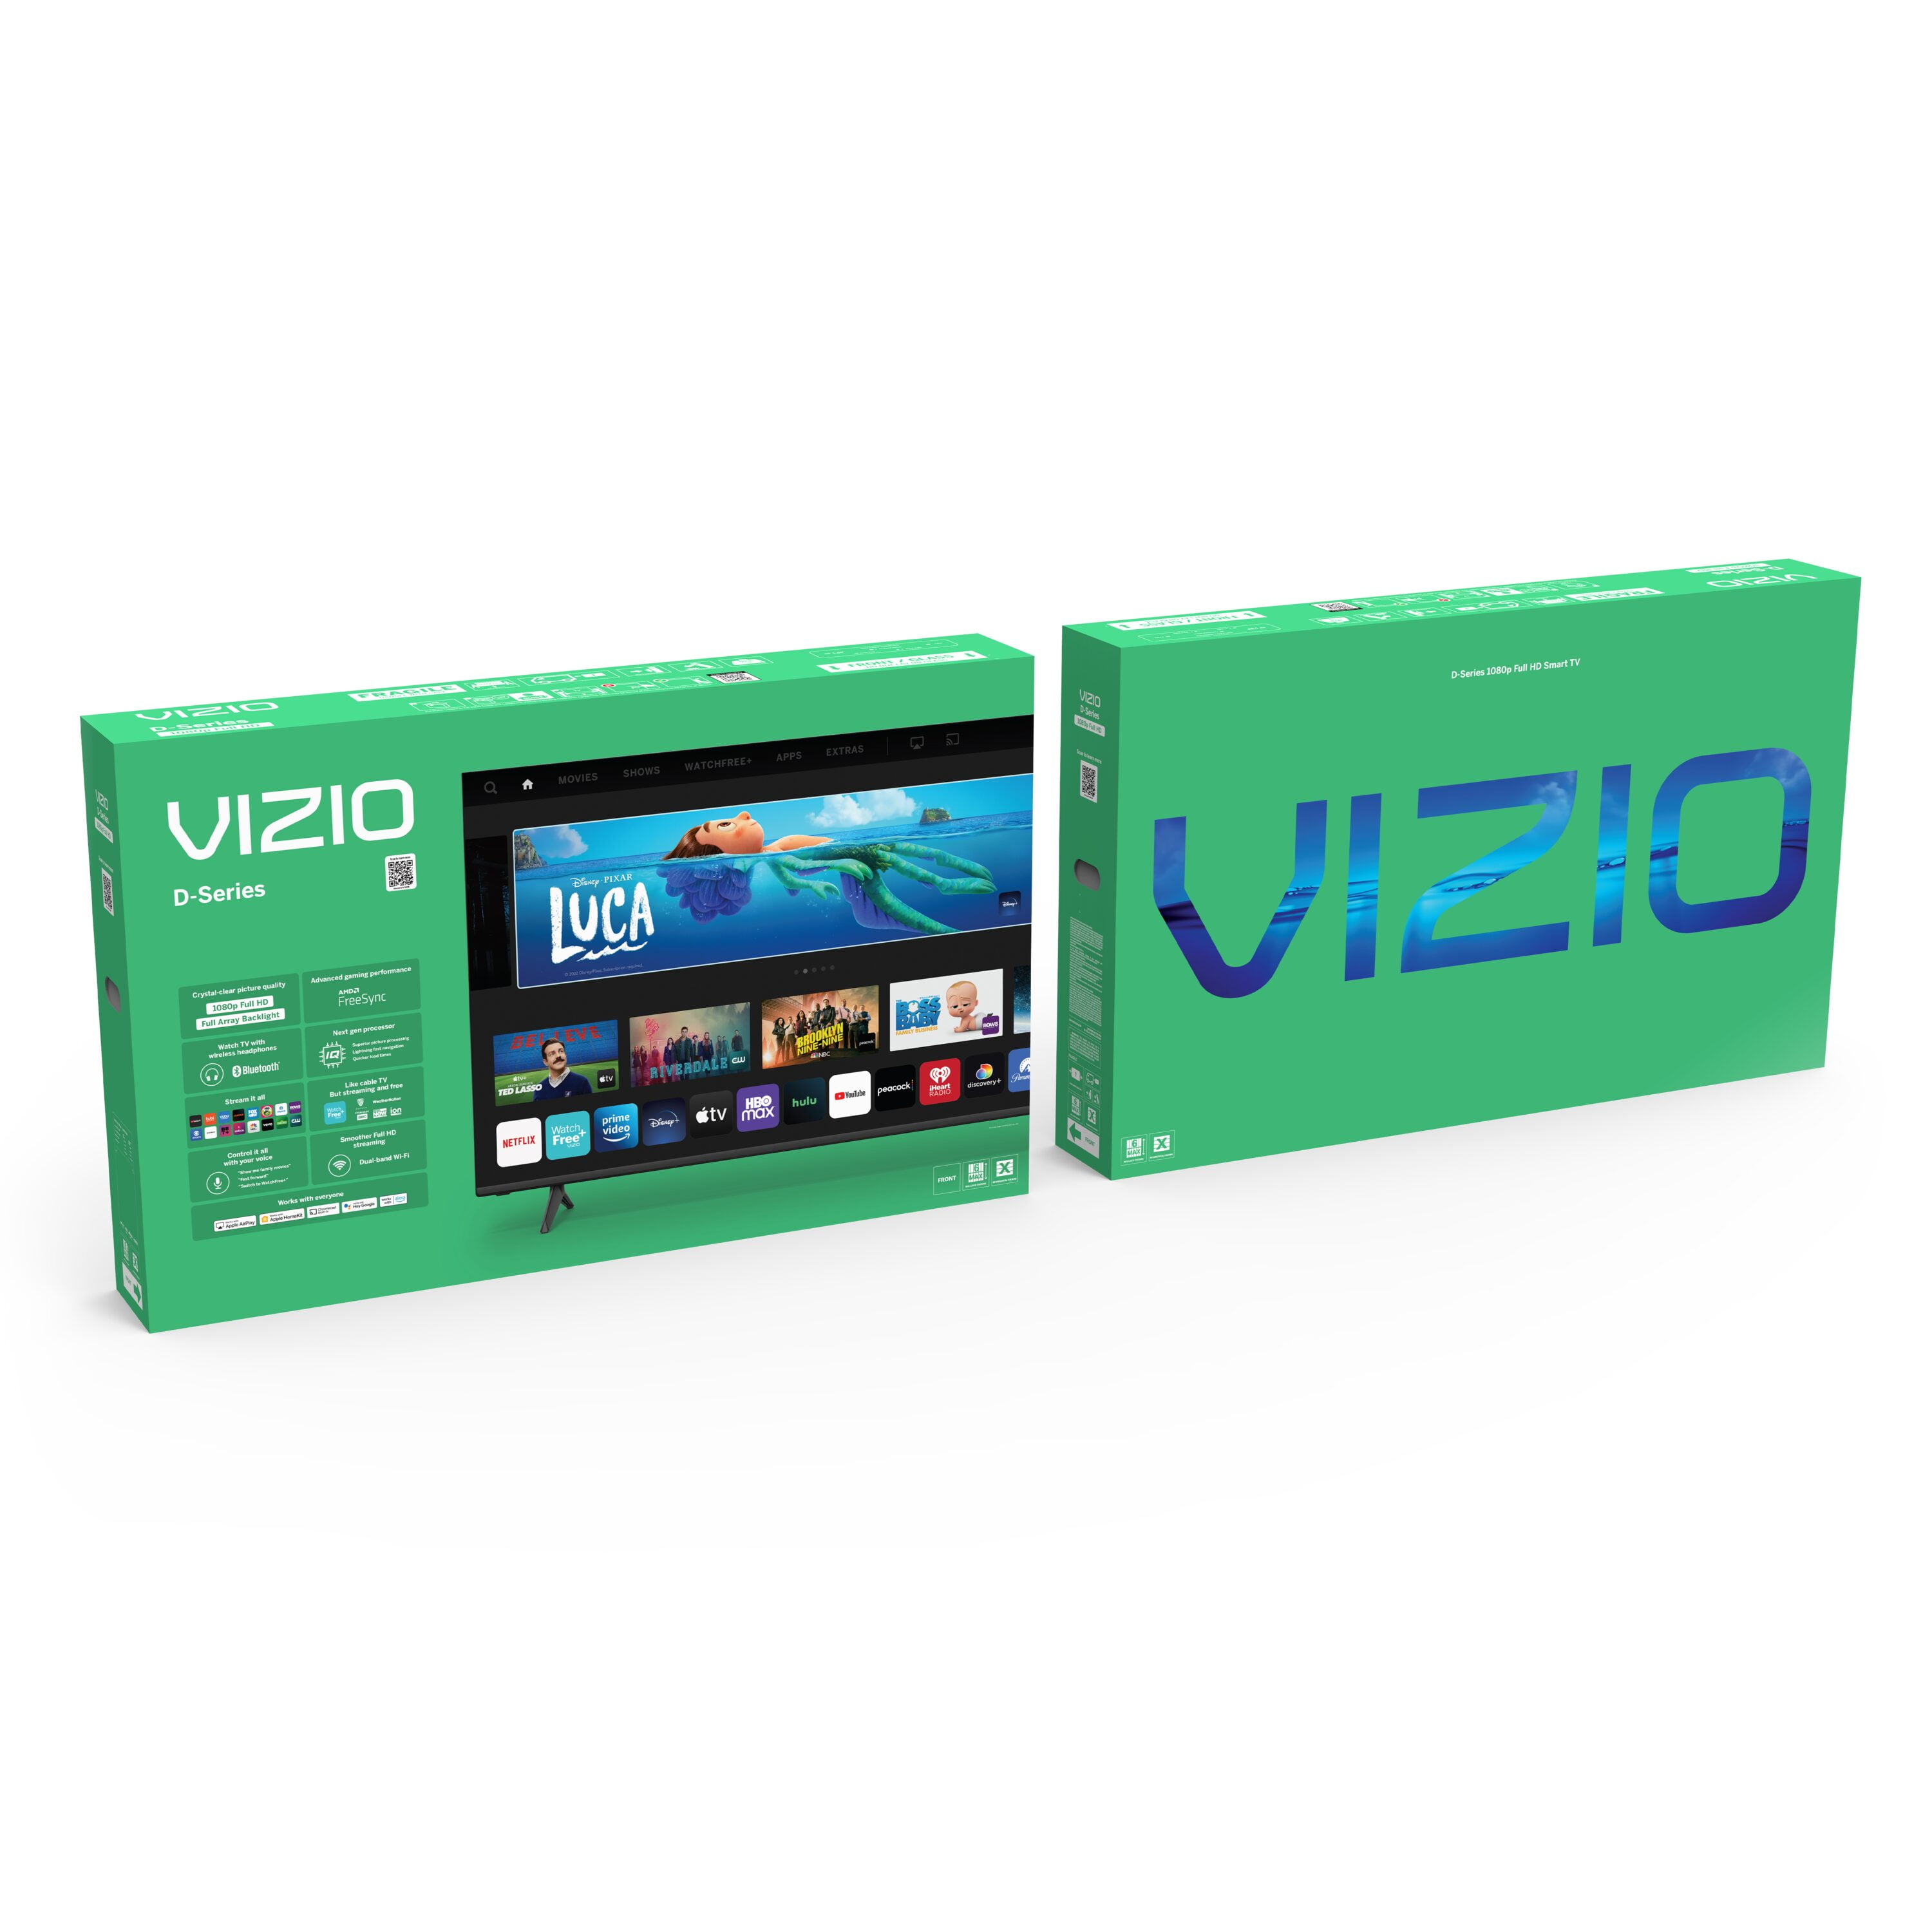 Does a Vizio Smart TV Have Bluetooth? - GadgetMates